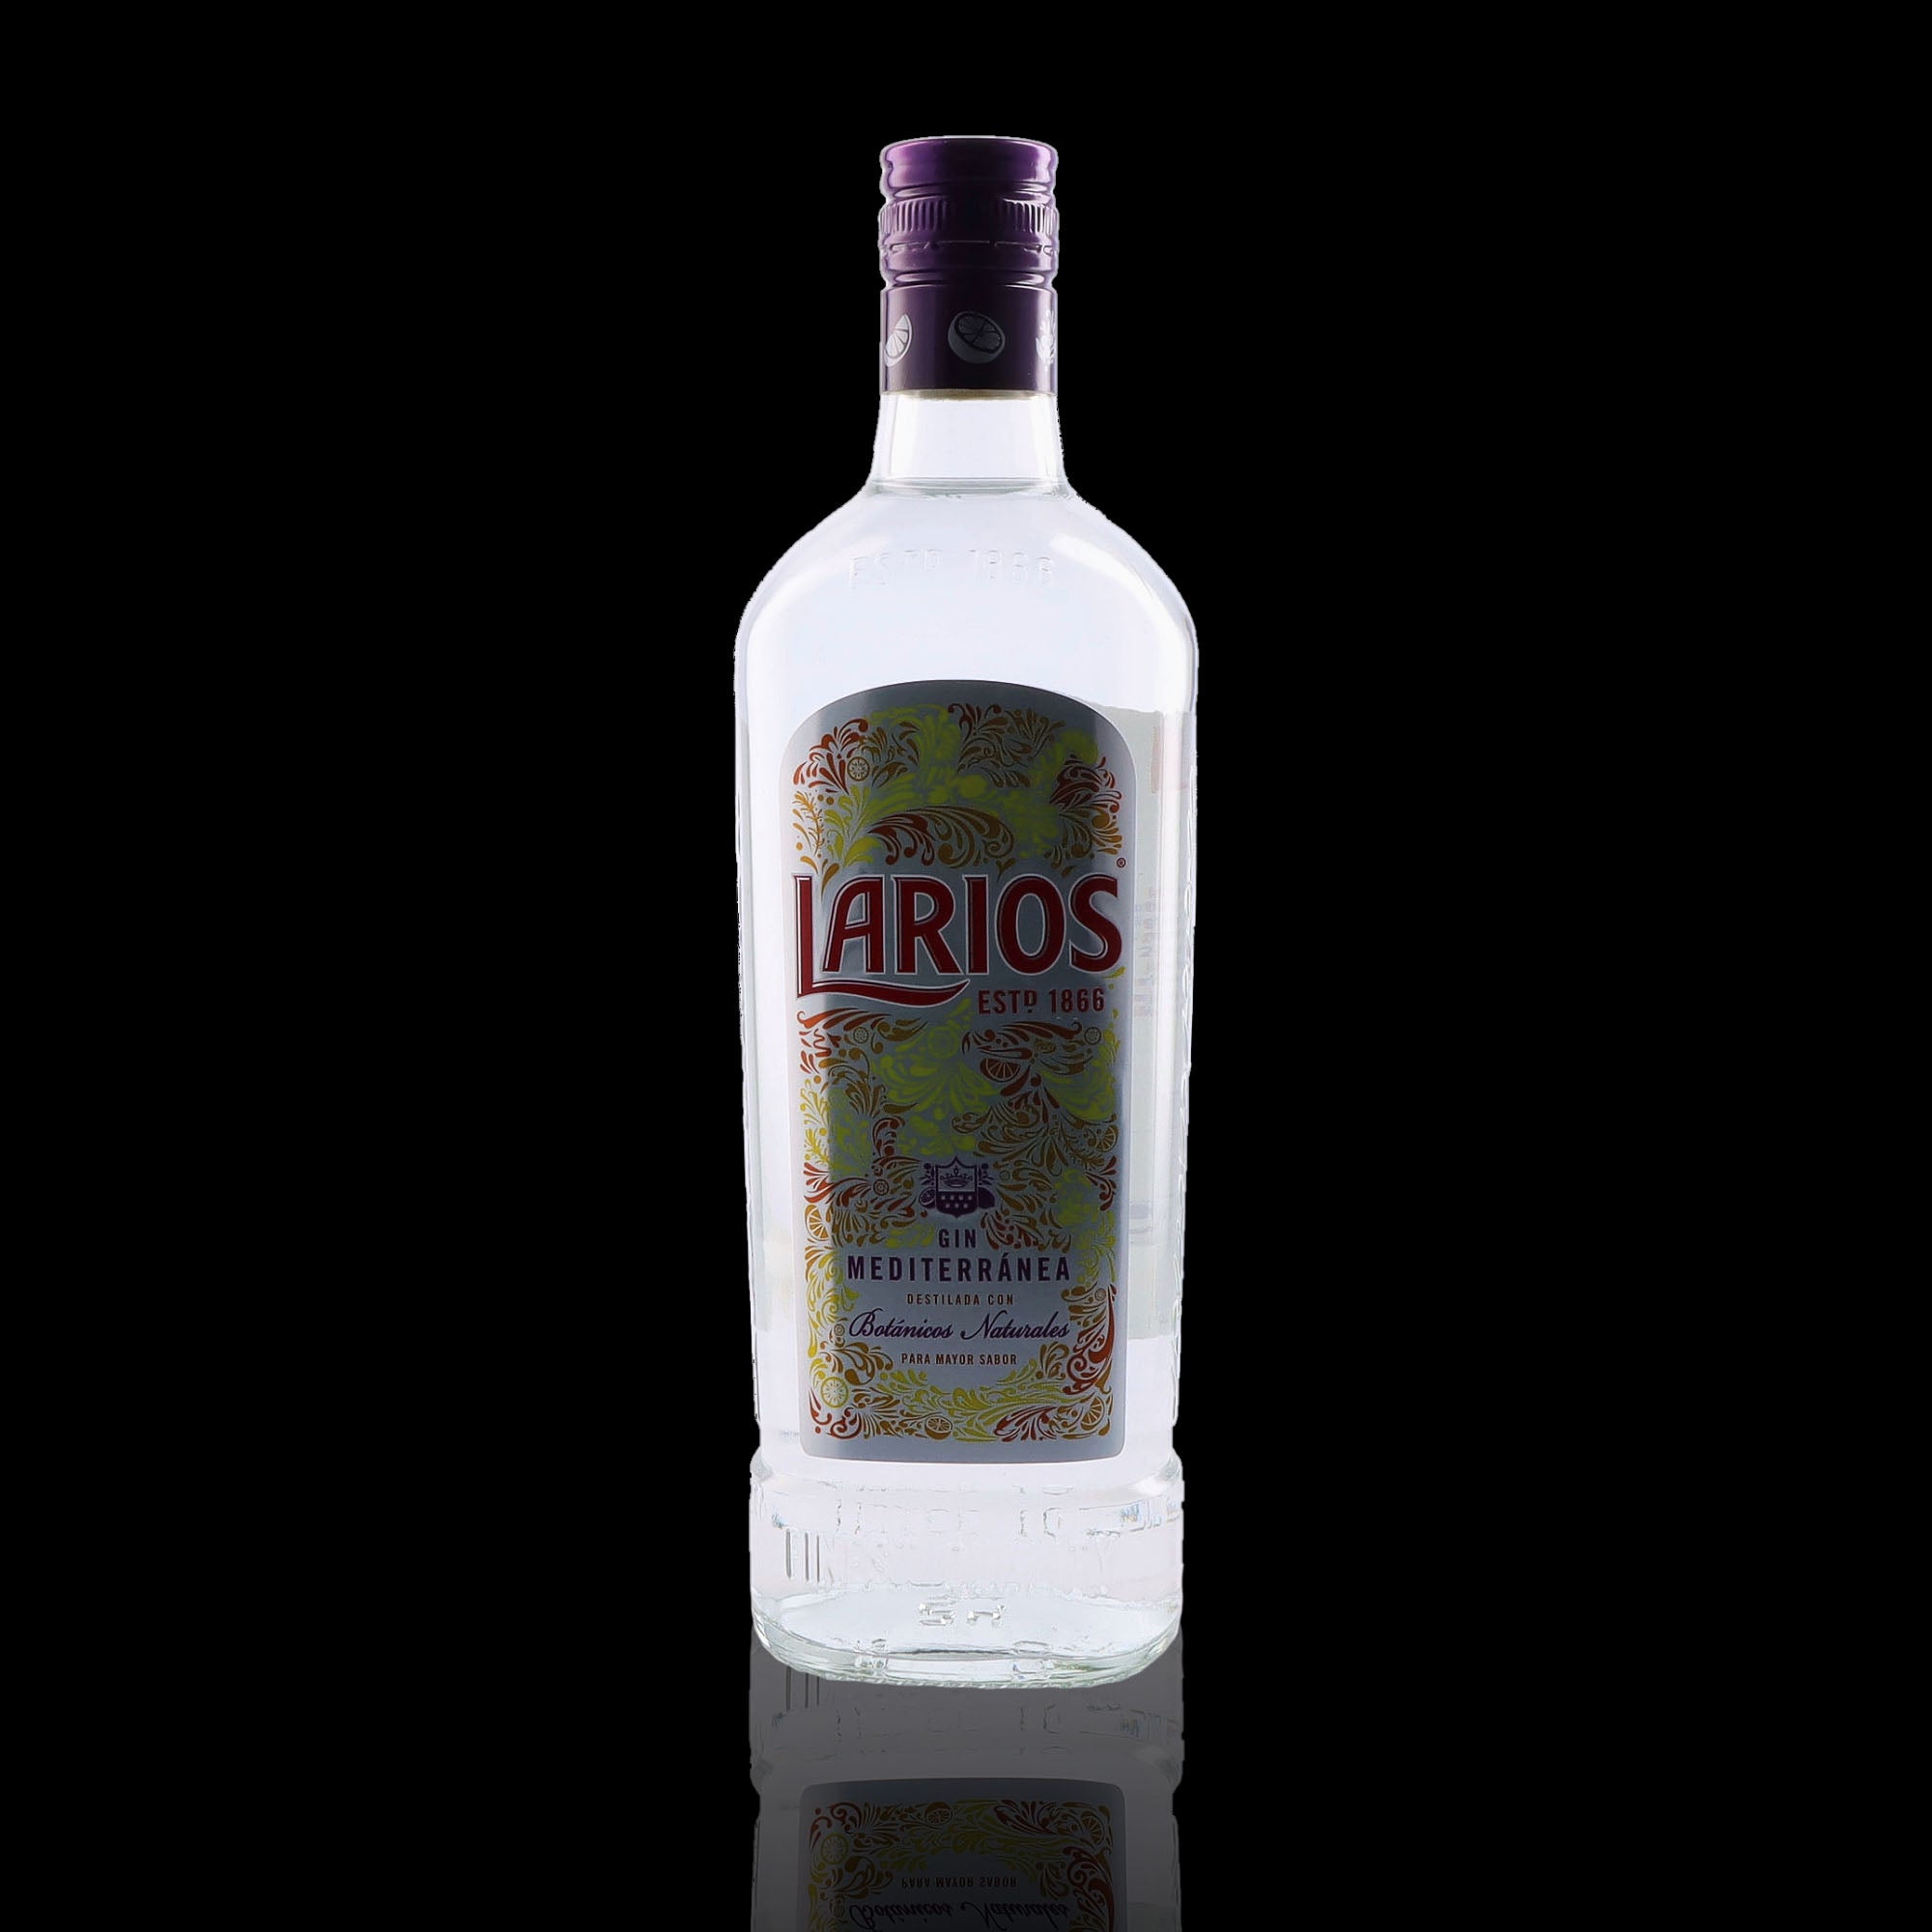 Une bouteille de Gin, de la marque Larios, nommée Mediterranea.